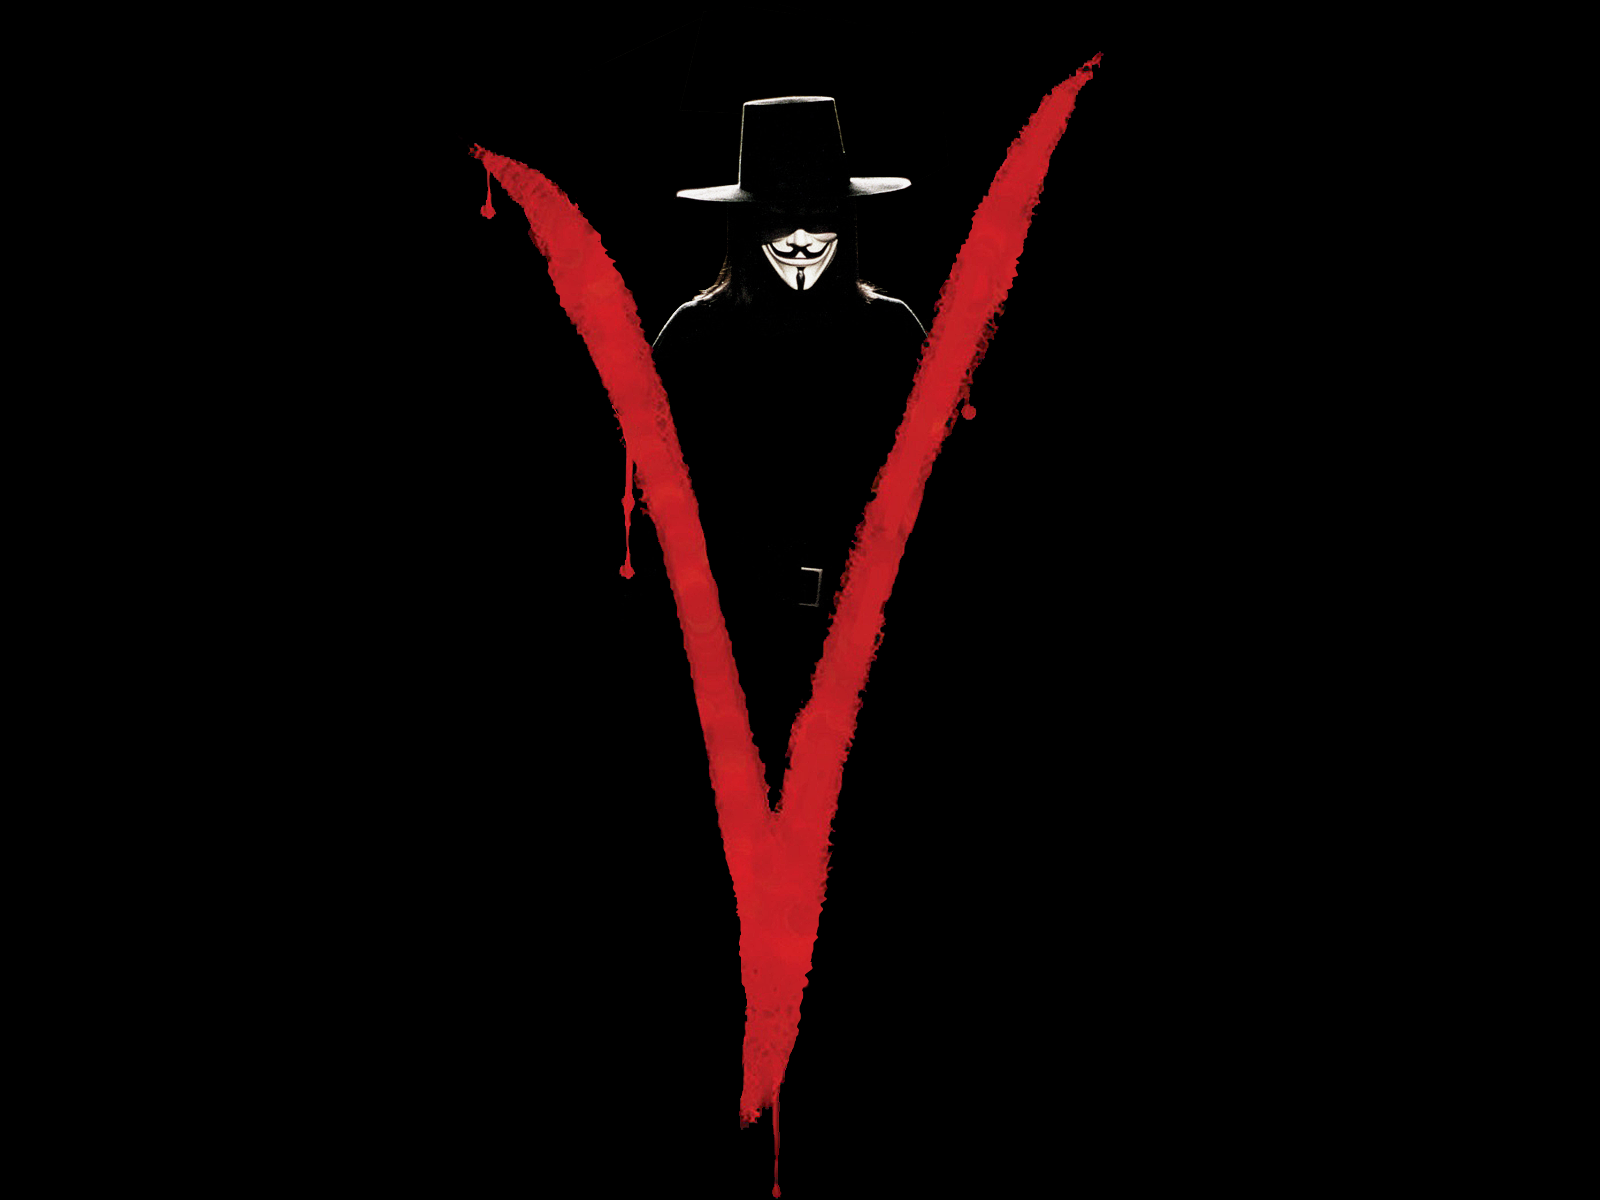 v_for_vendetta_remix_by_sacrificials.png